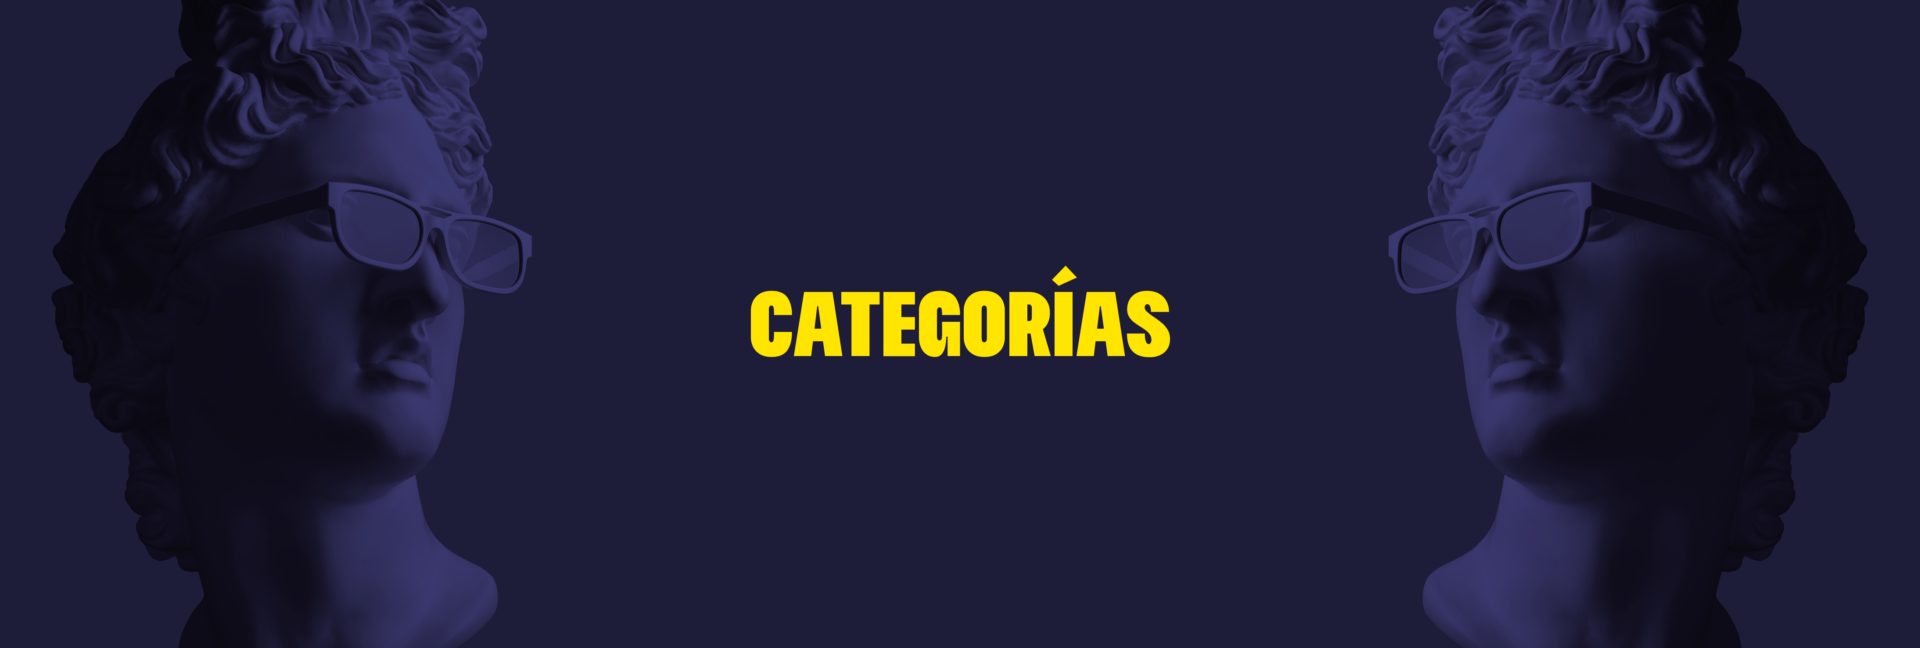 header categorias HC 2022 - Categorías